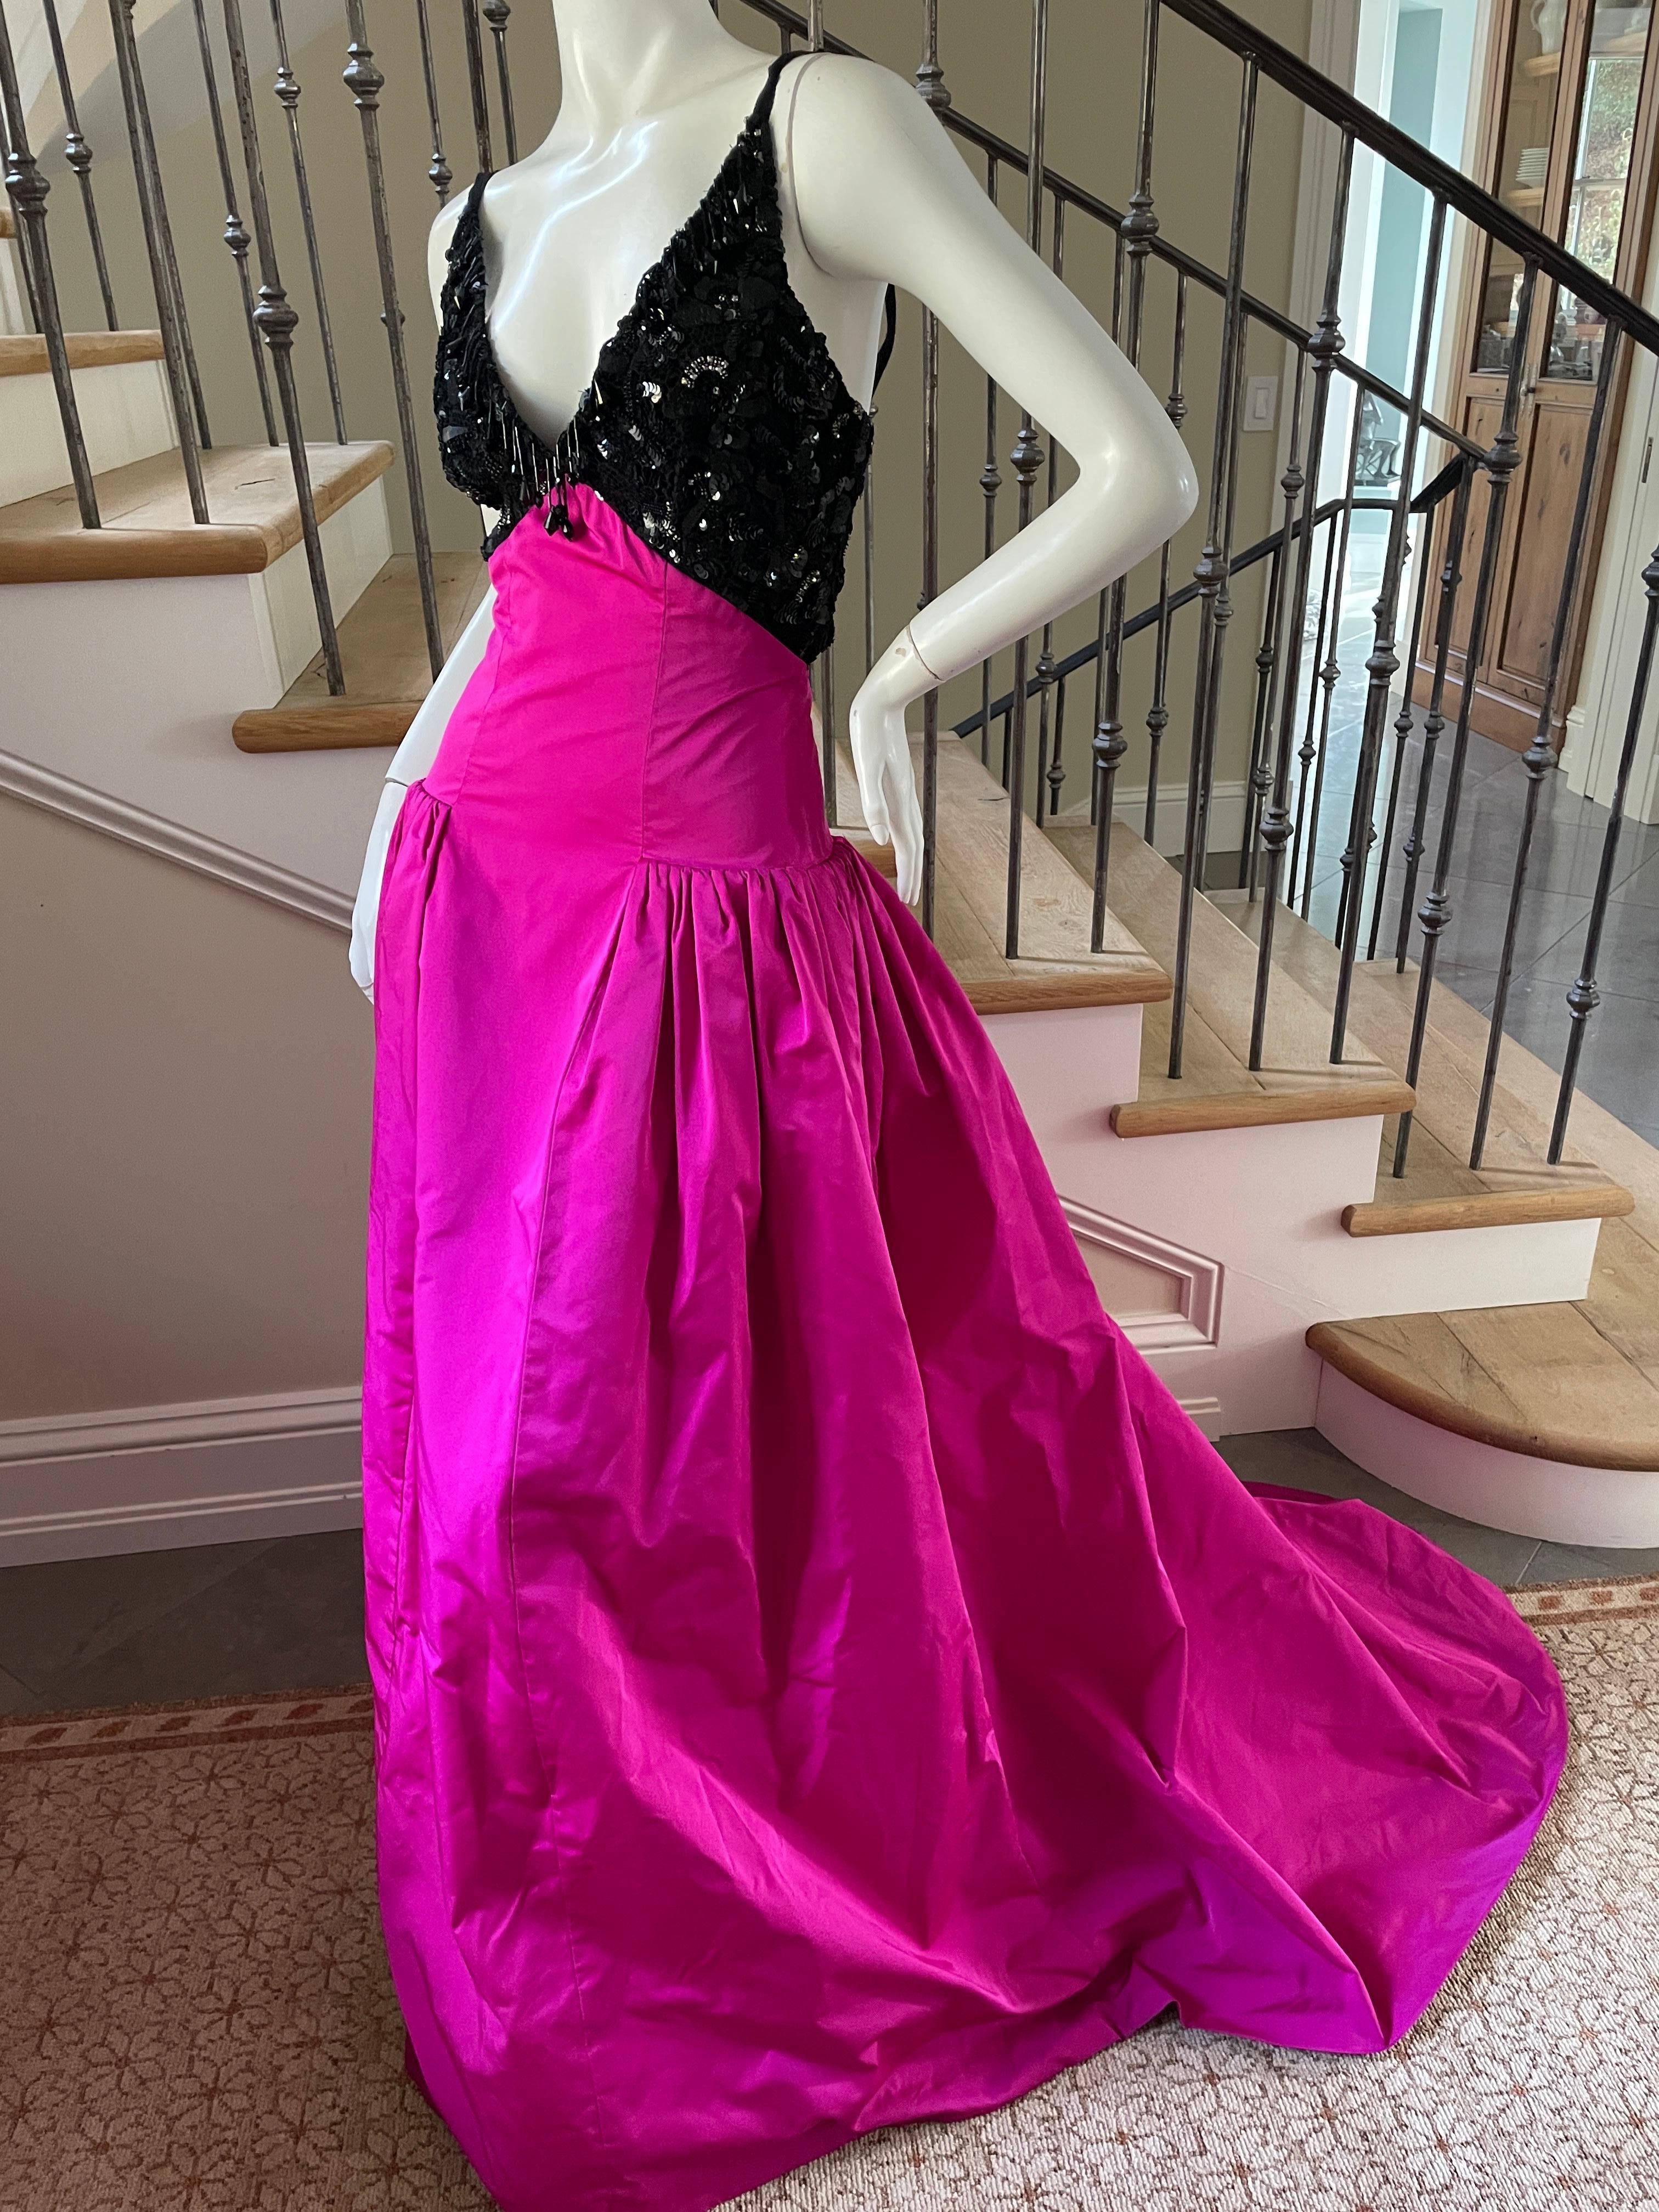 Oscar de la Renta Embellished Evening Dress w Fuschia Taffeta Ball Skirt & Train For Sale 3